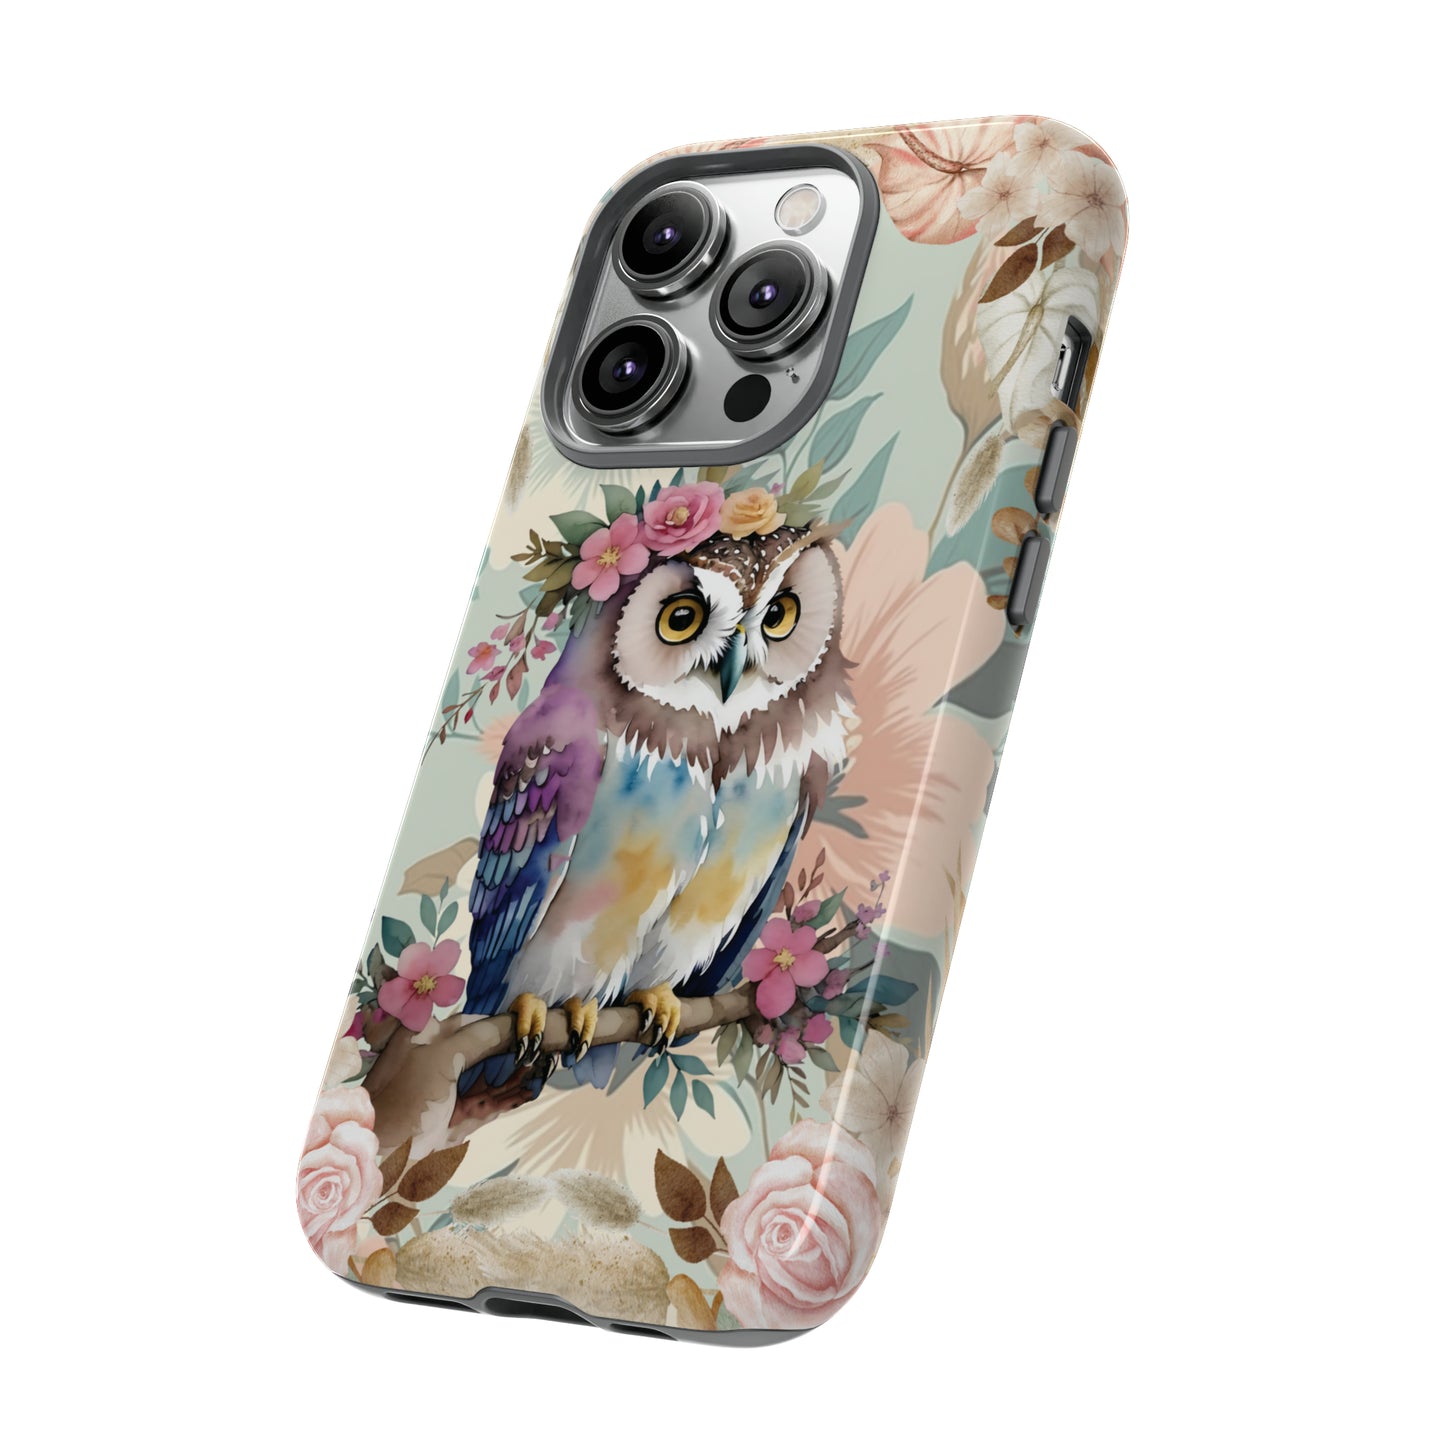 Boho Owl with Flowers Tough Phone Case